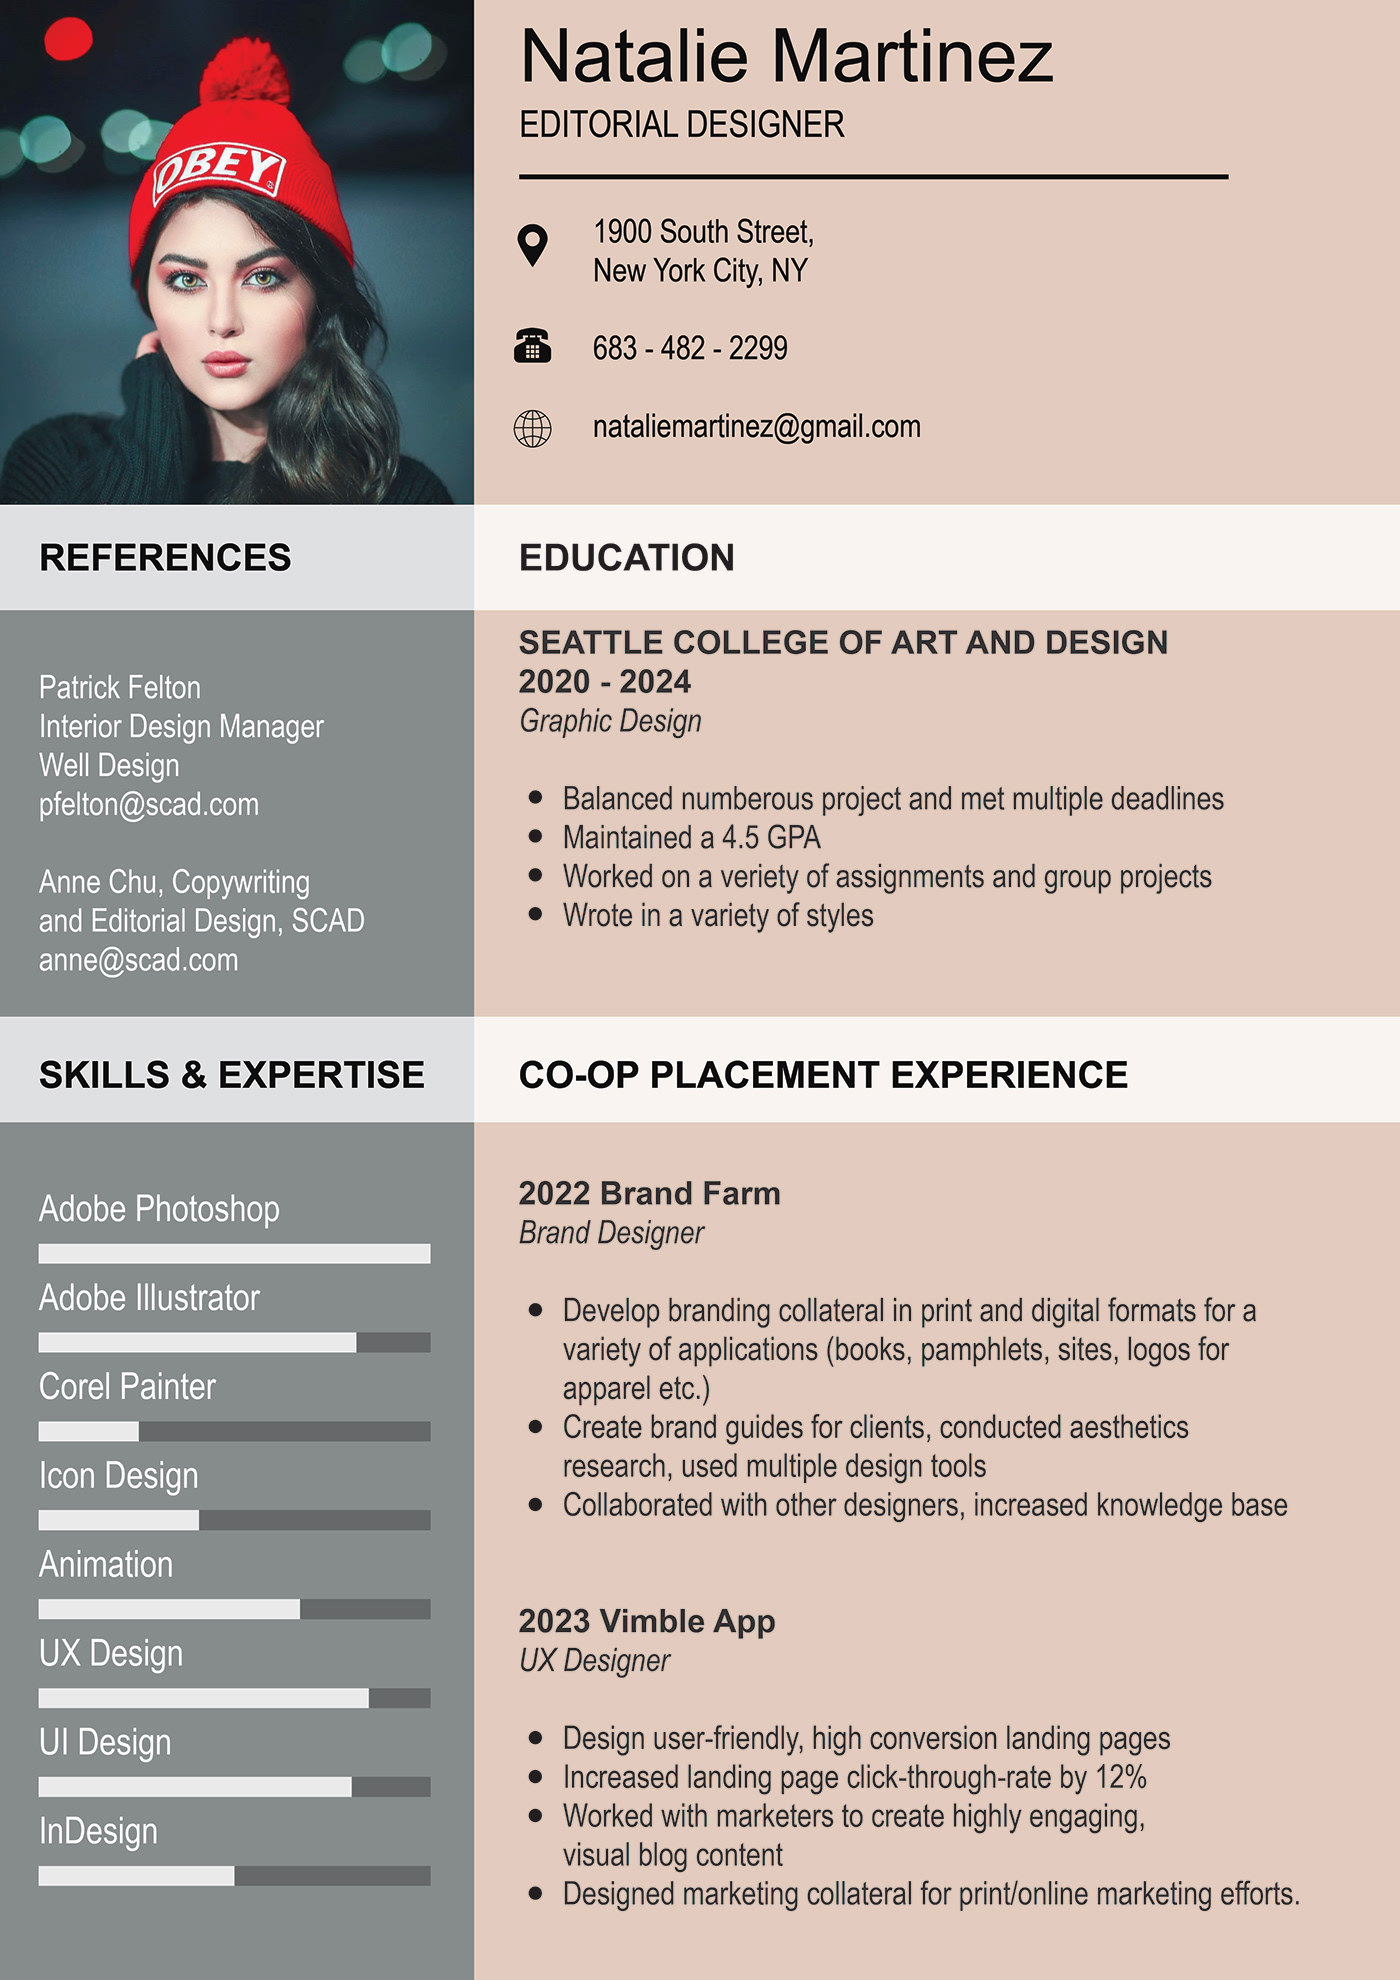 text adobe illustrator digital illustration vector resume design CV template PROFESSIONAL RESUME creative modern